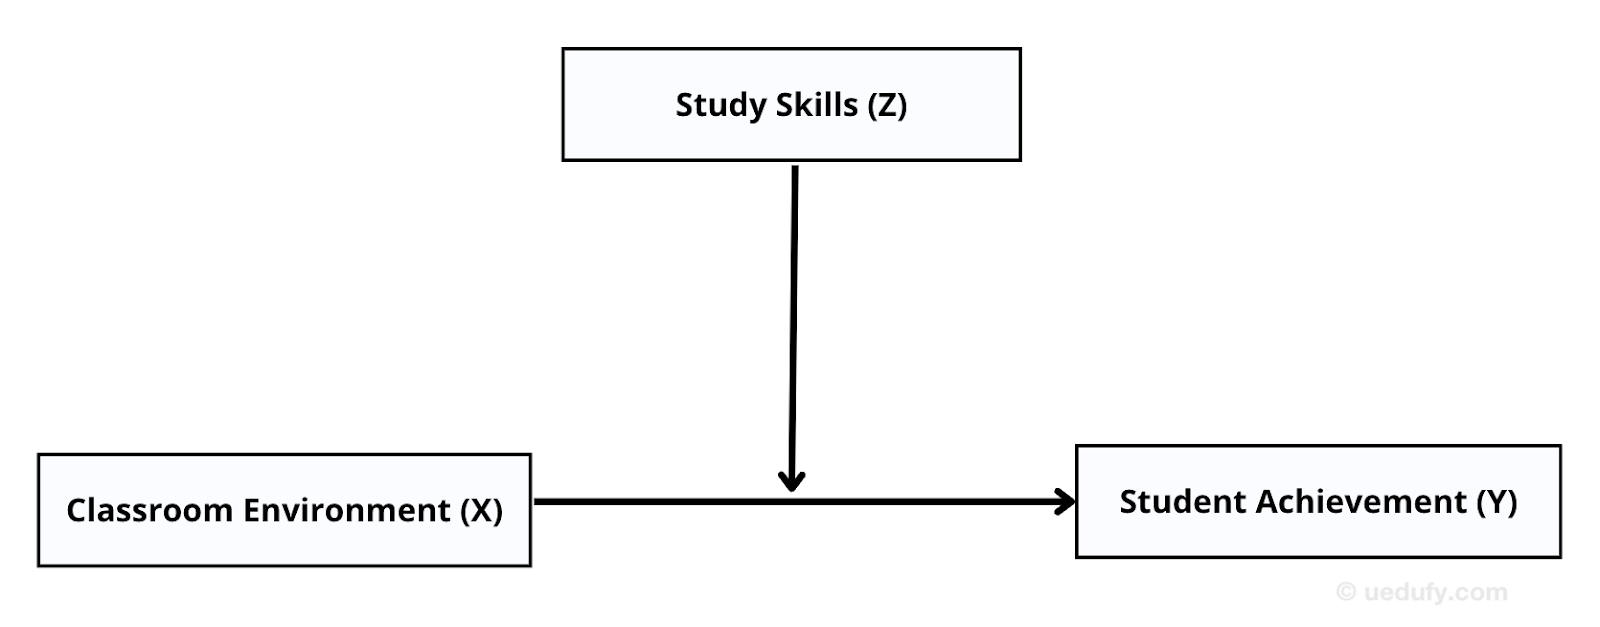 Path diagram research idea 5 (moderation analysis). Source: uedufy.com 